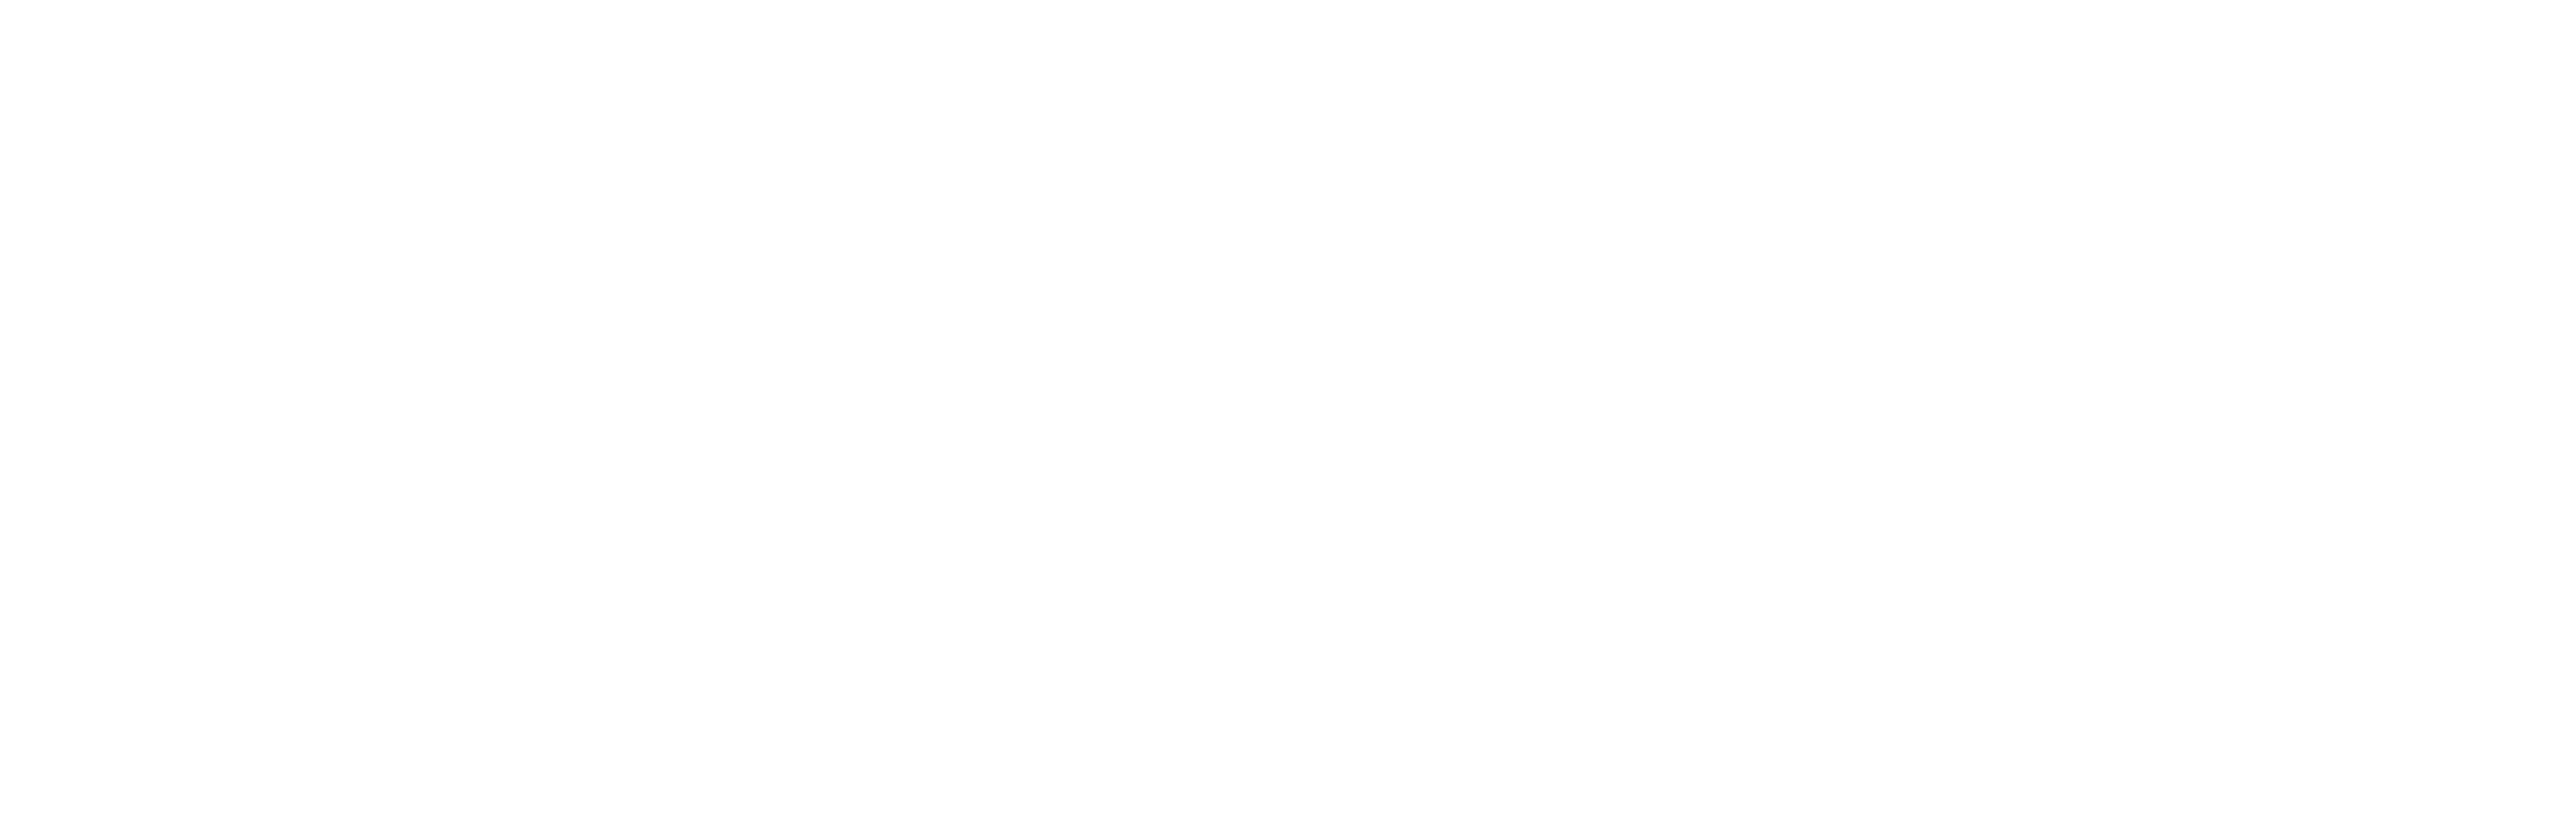 flexalease.com - flexalease - logo Luxury & Sports Car Subscription Flexible / Short term car lease Lease takeover - swapalease - l Leasetrader - leasetrader.com